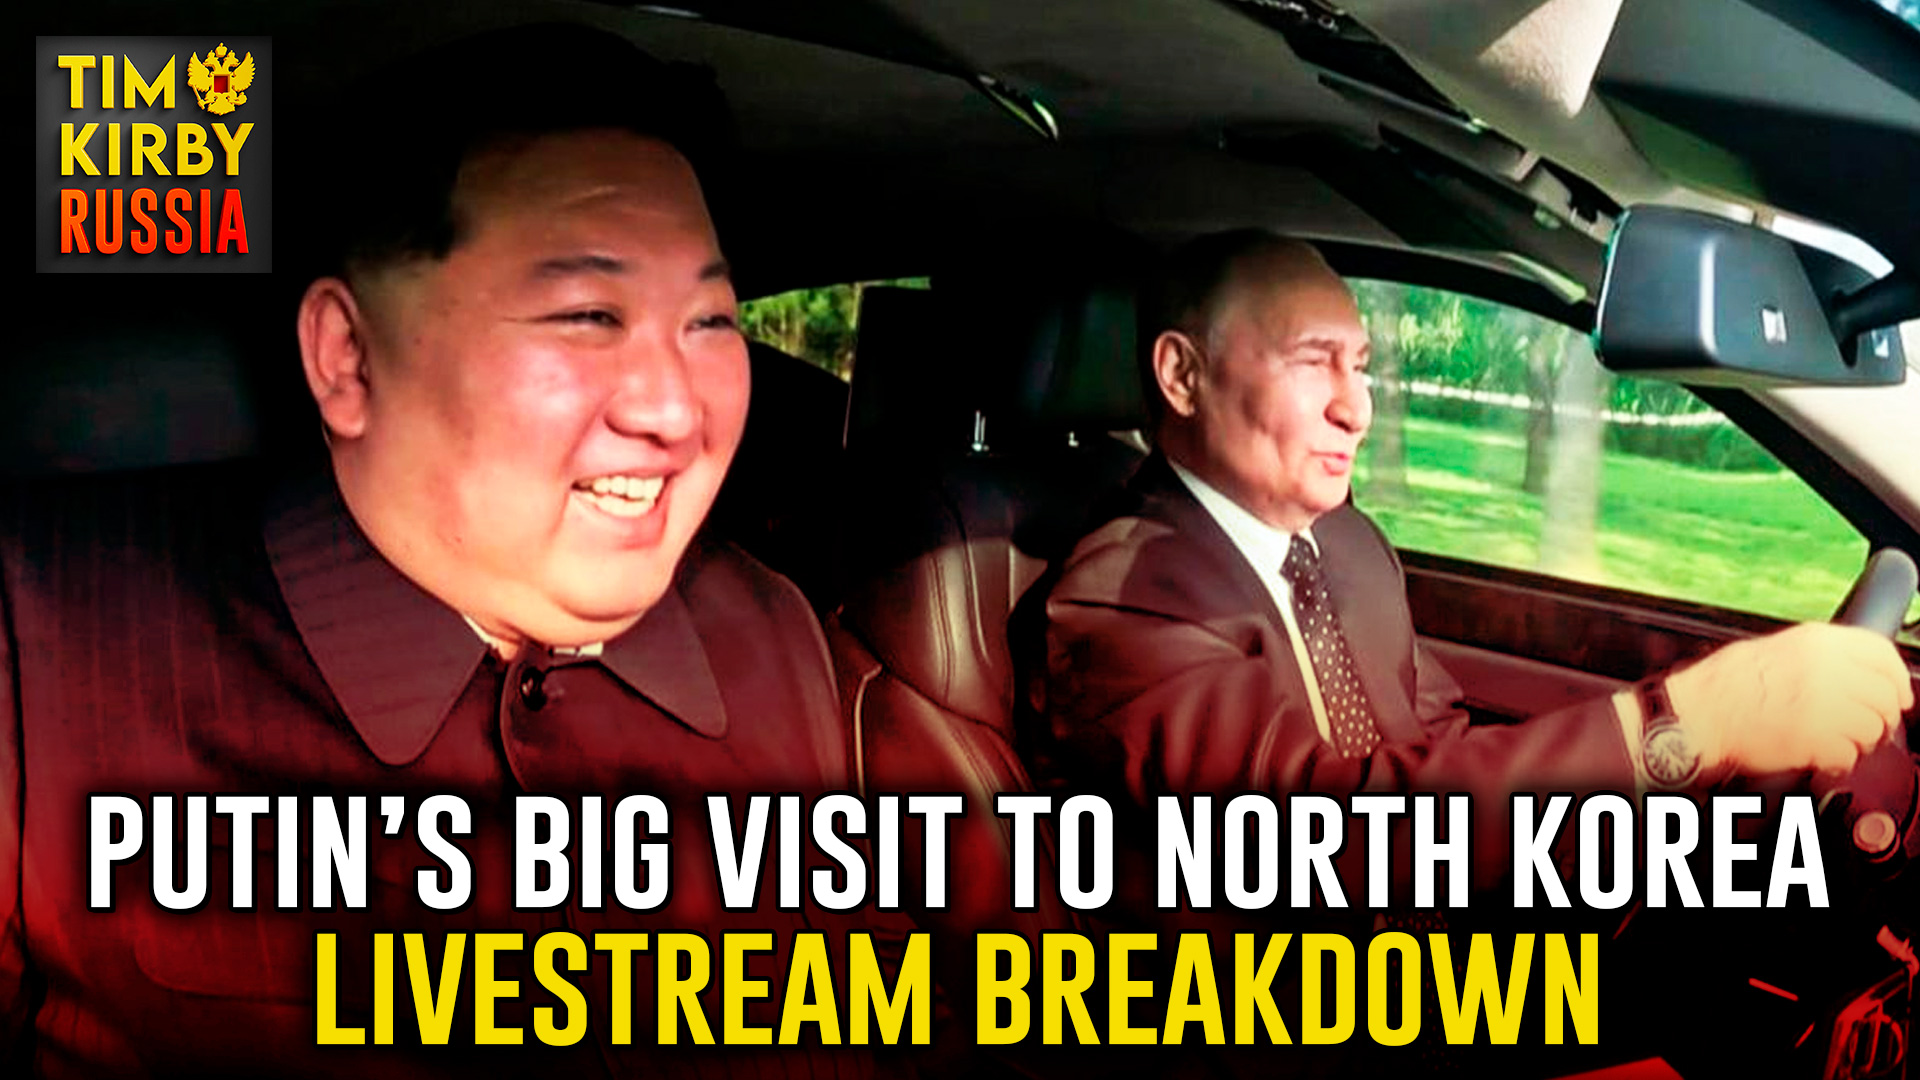 "Putin’s big visit to North Korea - Livestream Breakdown"